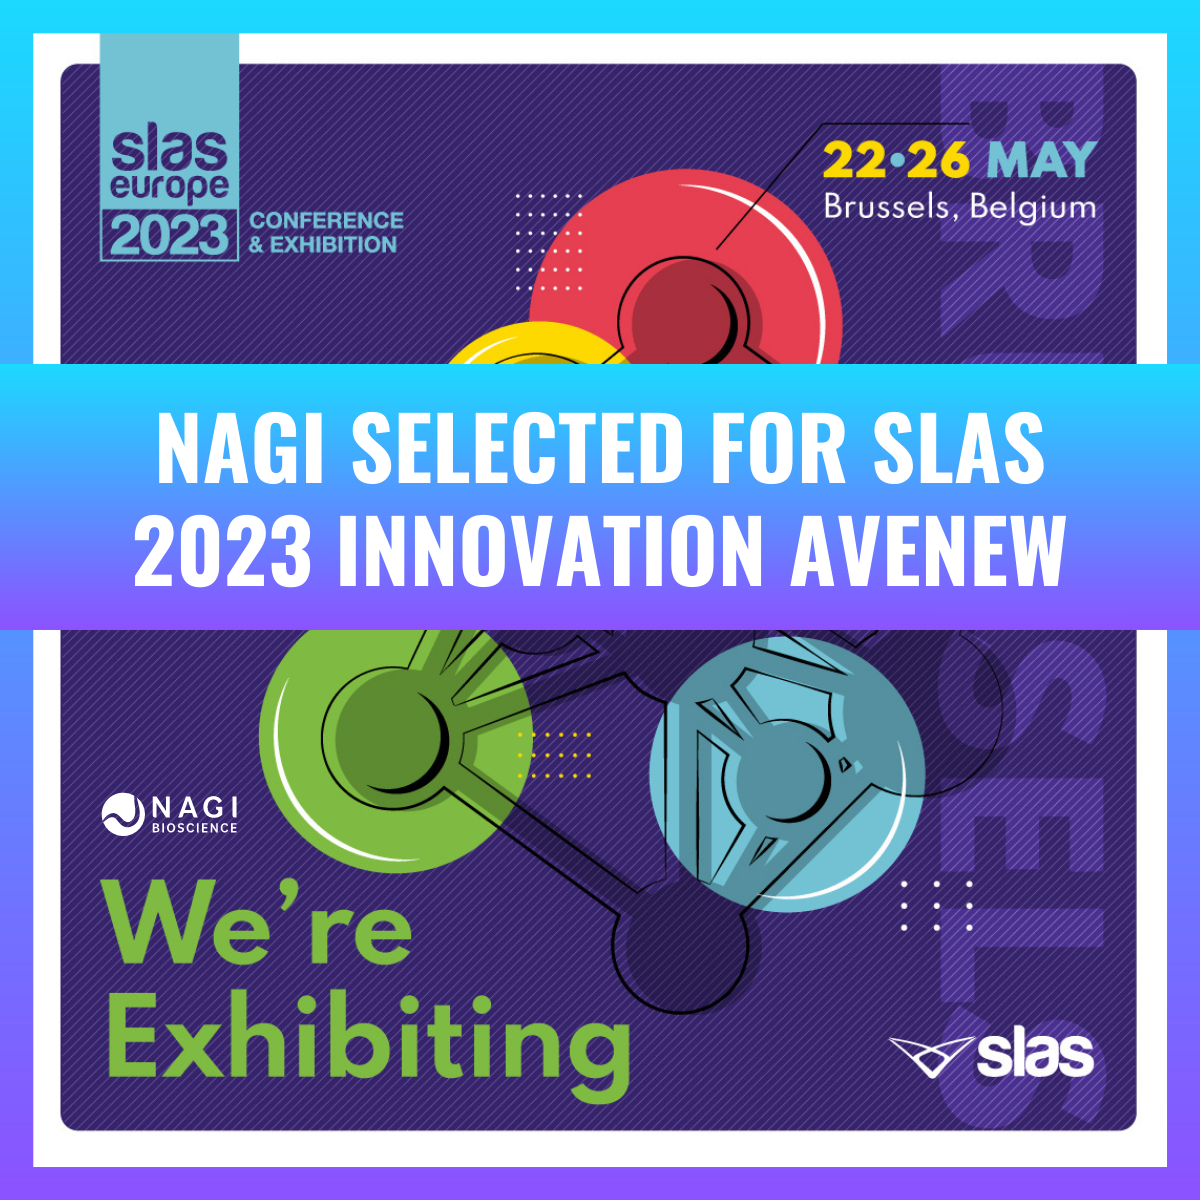 Nagi Bioscience has been selected for SLAS Innovation AveNew 2023